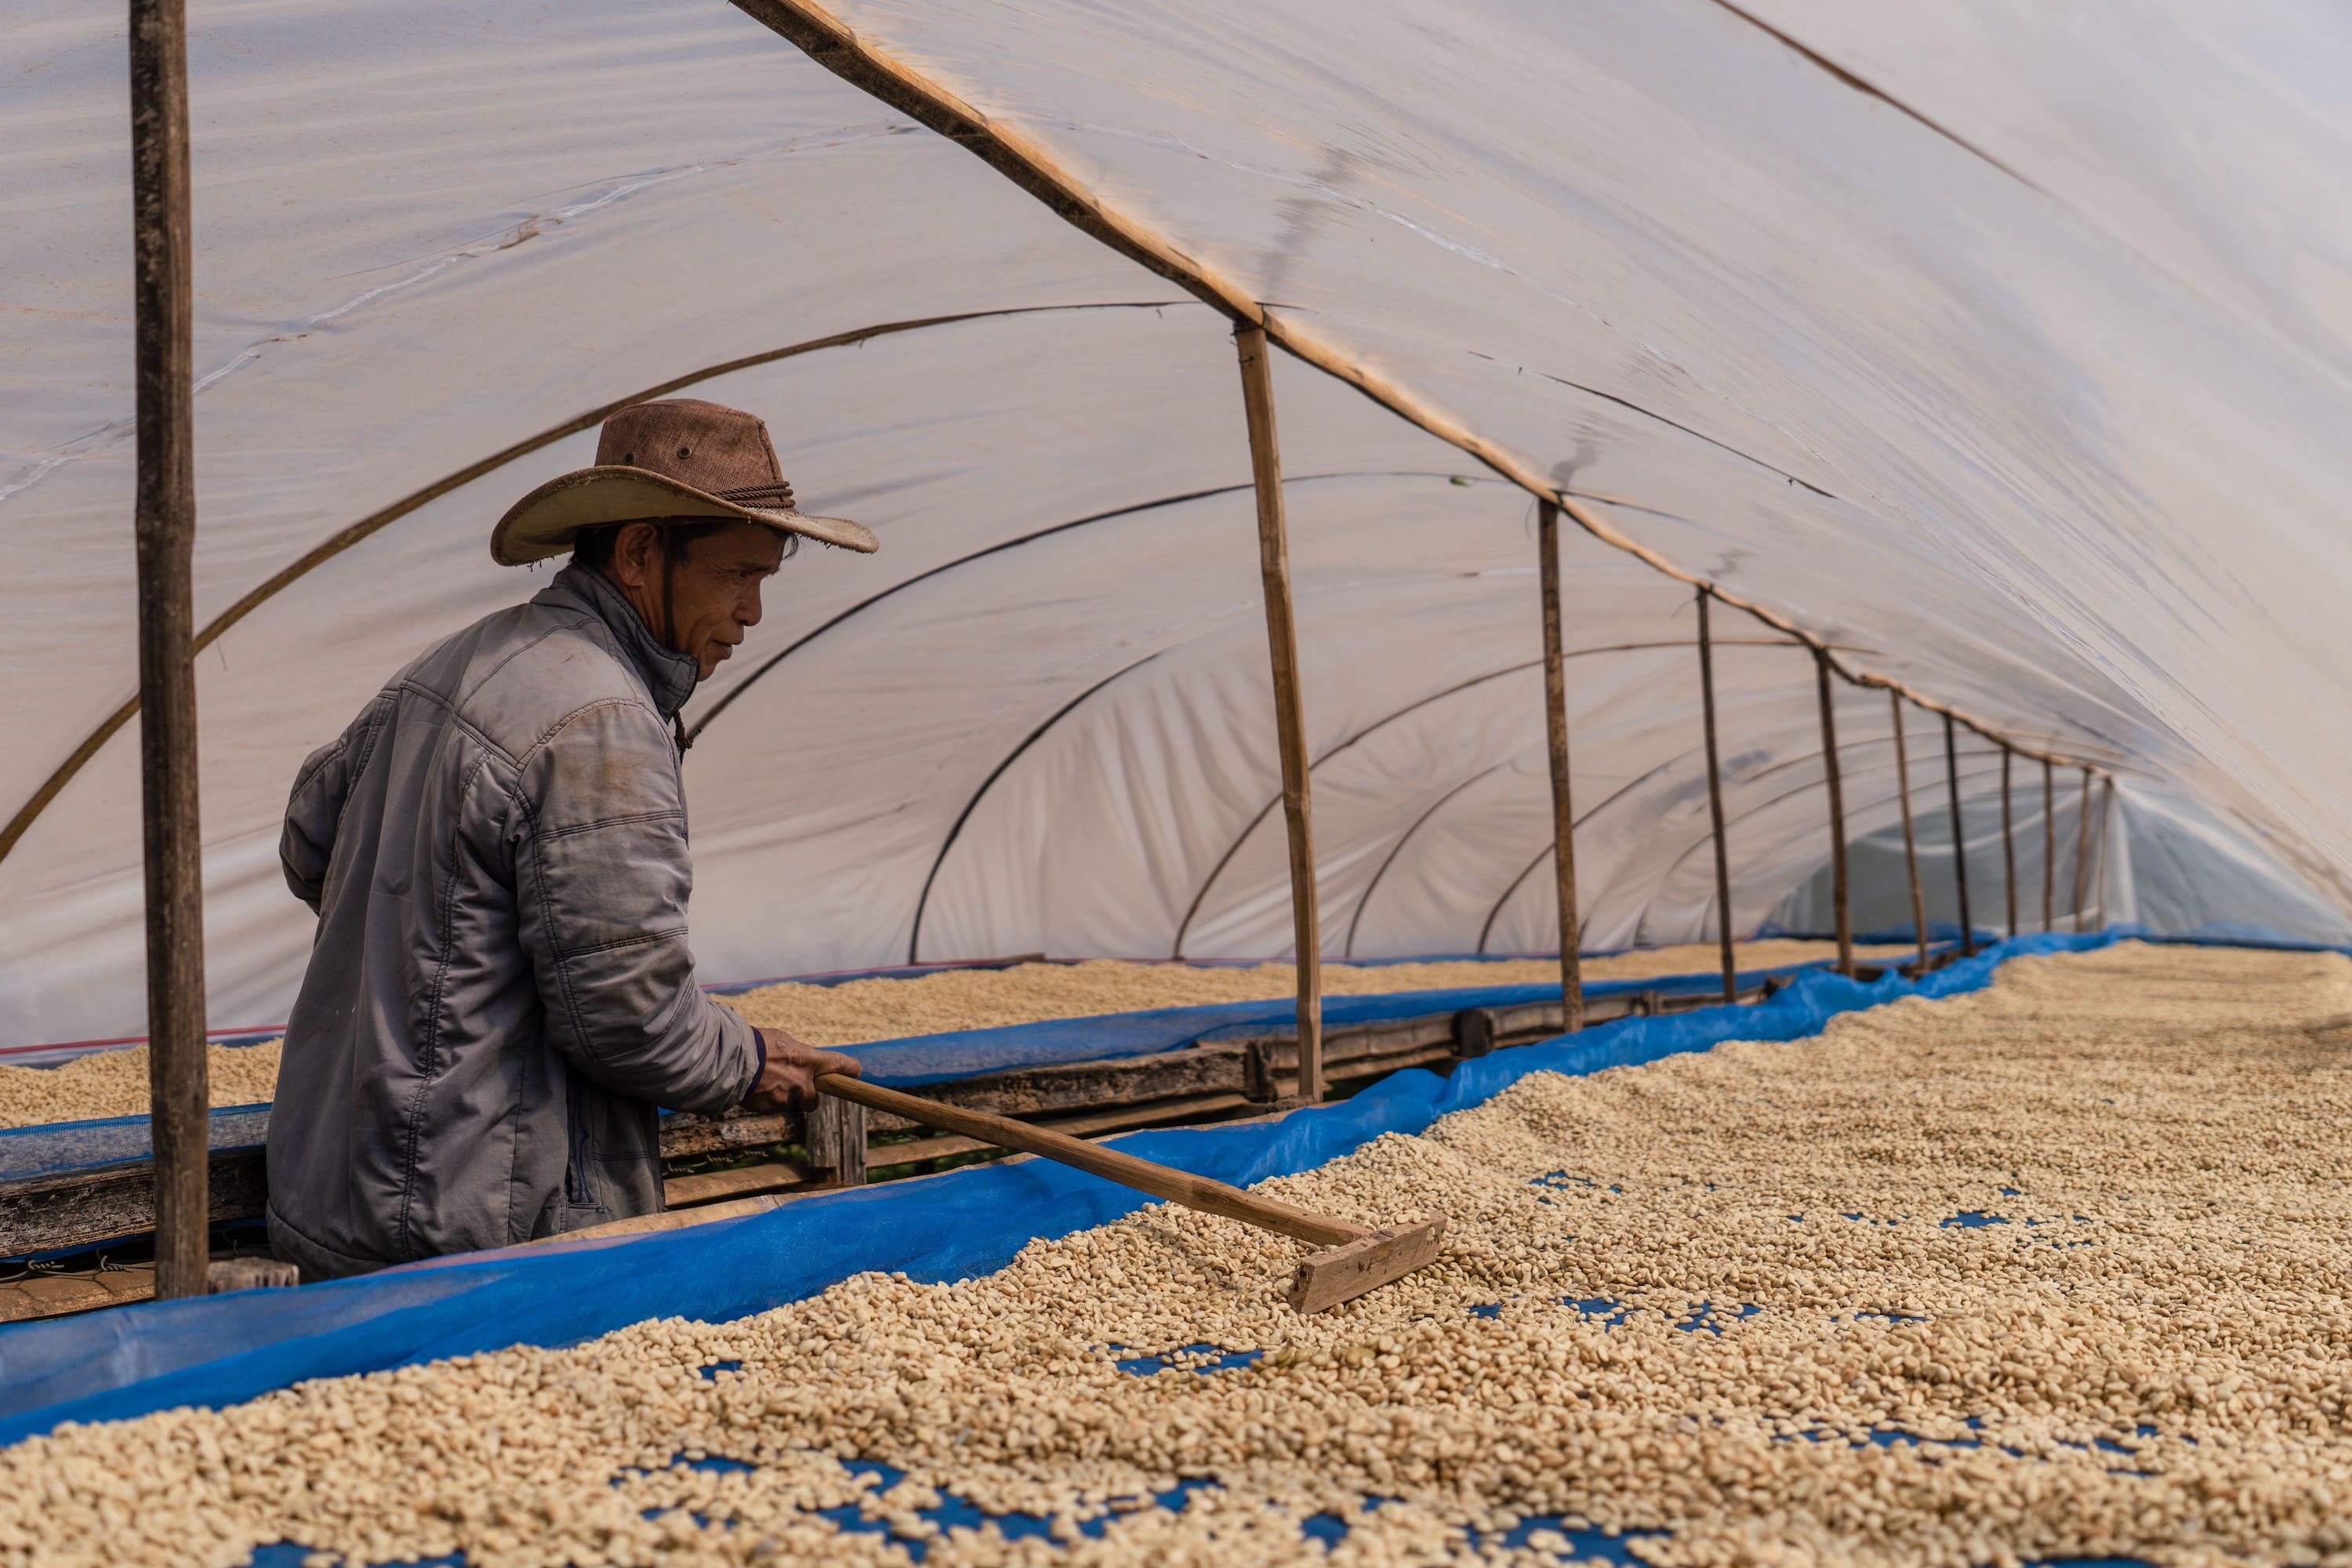 Processing Coffee by Slow - Farmer Mr. Phetsamai (Phoumone)